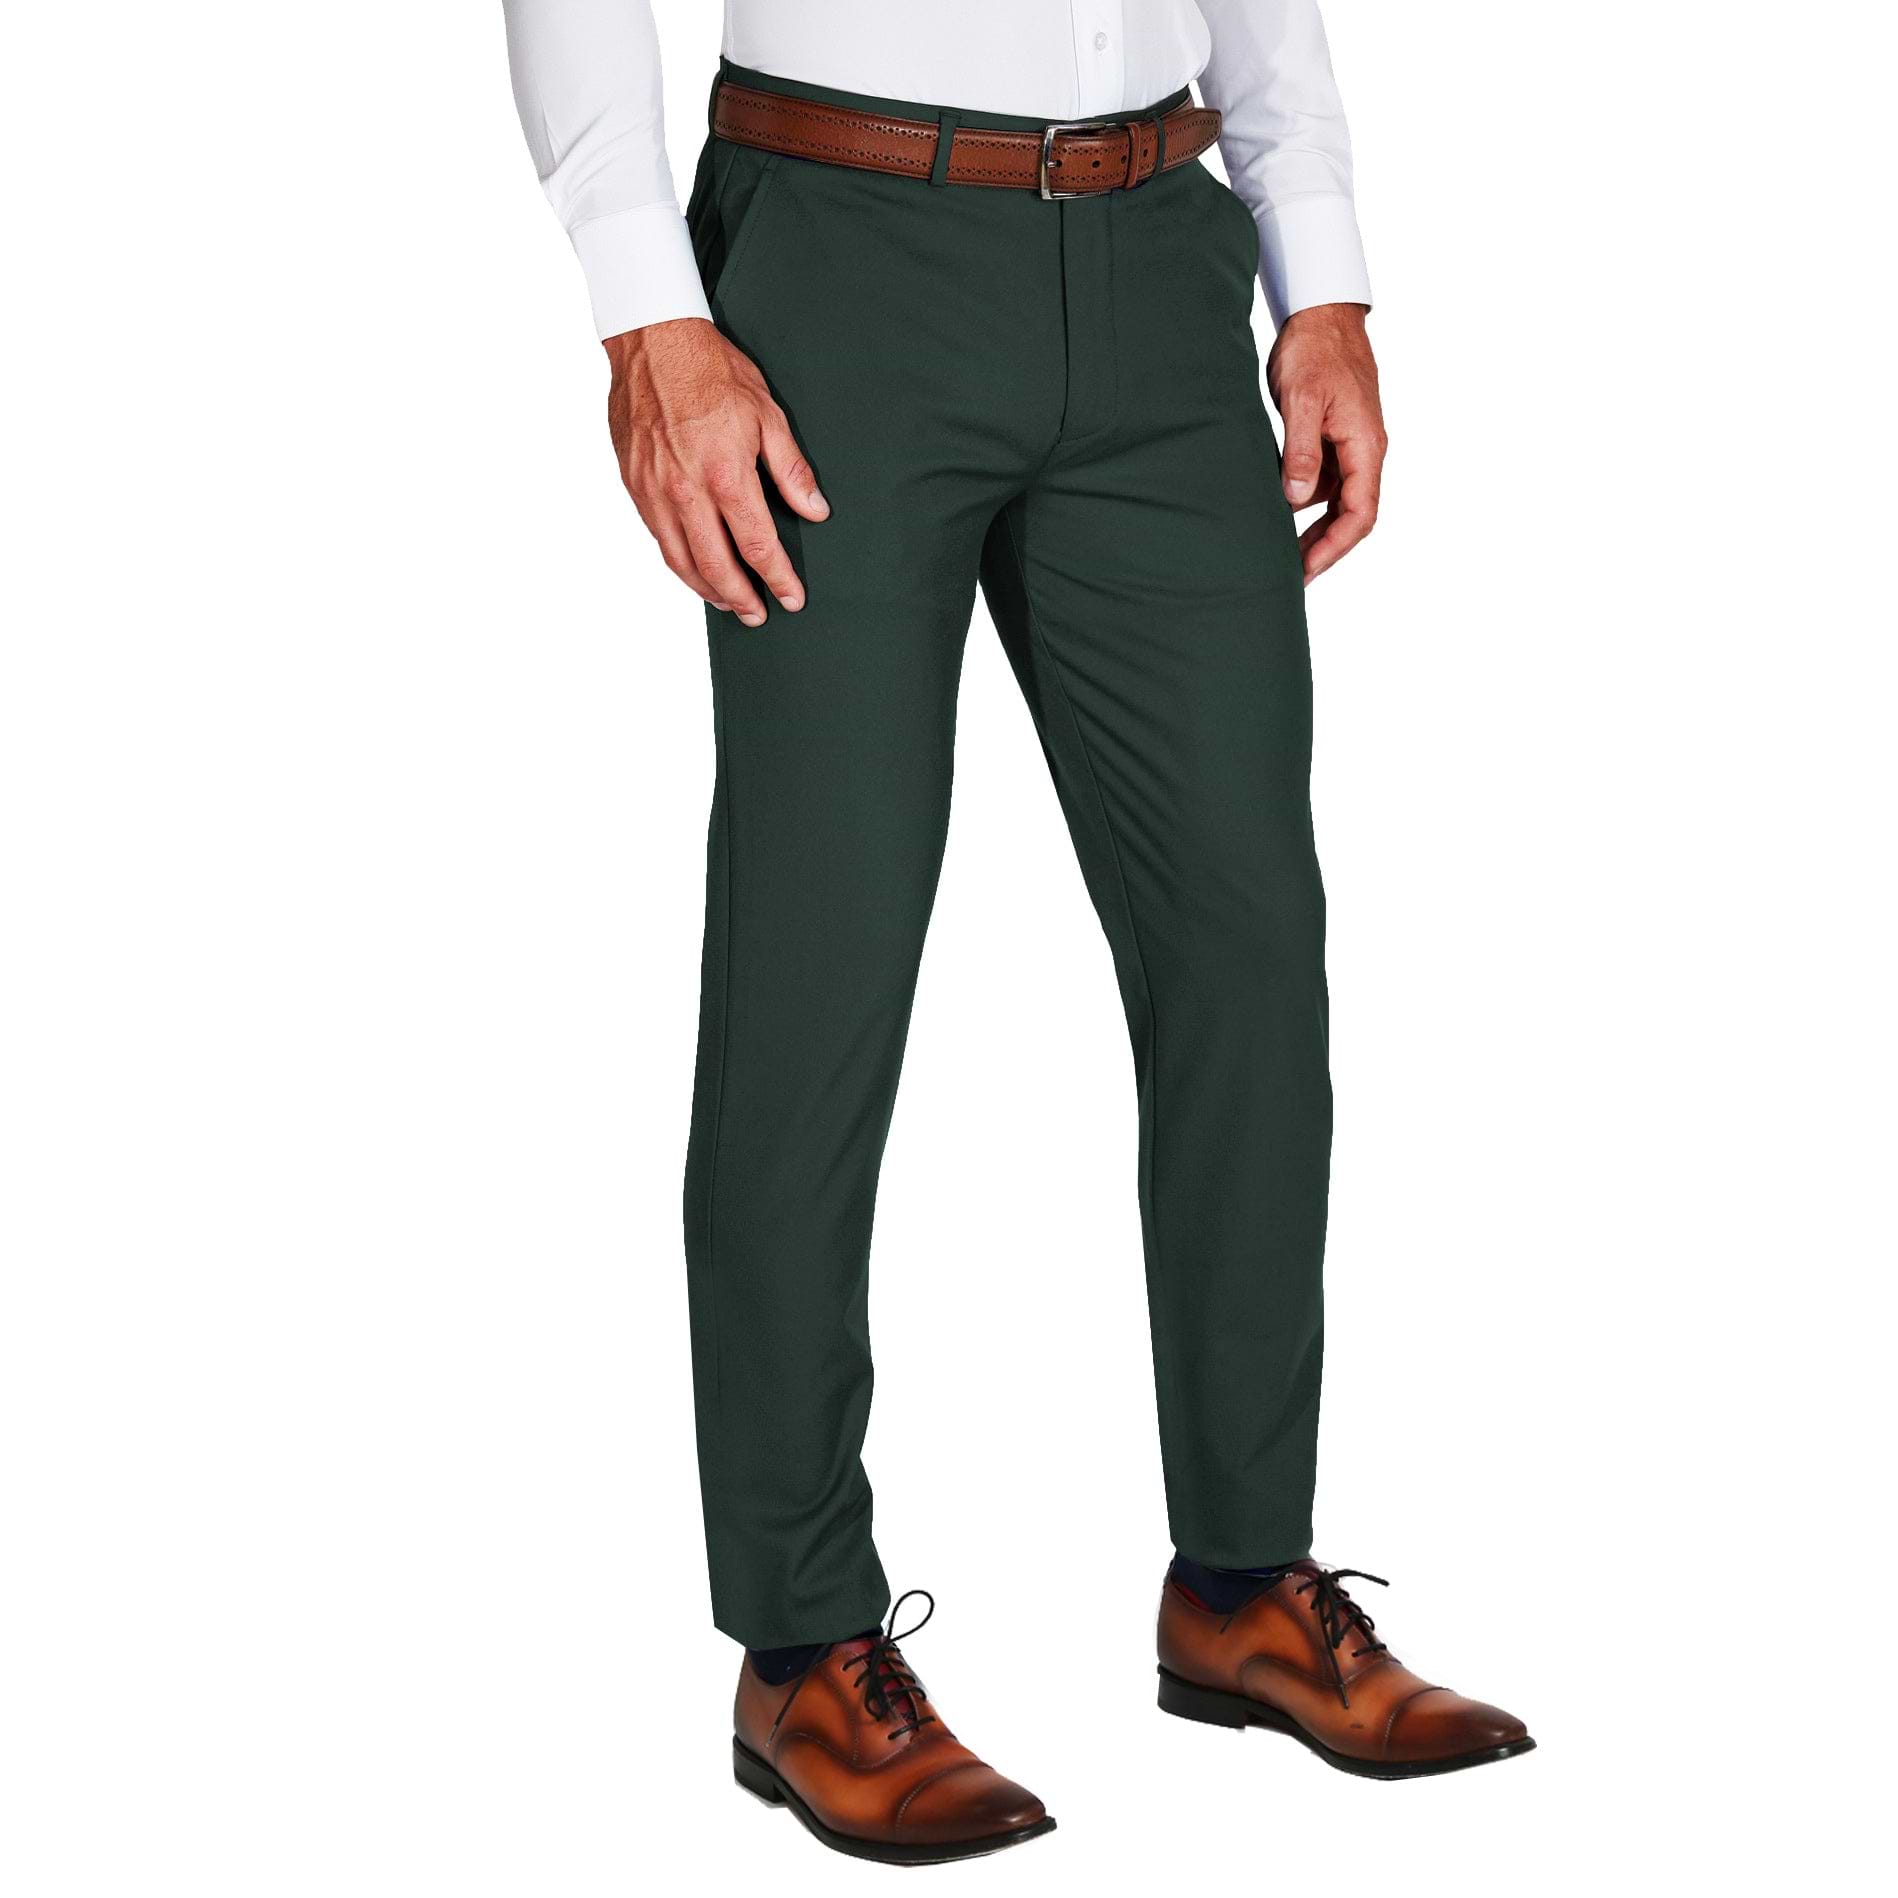 Design Mens Formal Pants | Formal Pant Styles Men | Dress Pants Styles Men  - British - Aliexpress